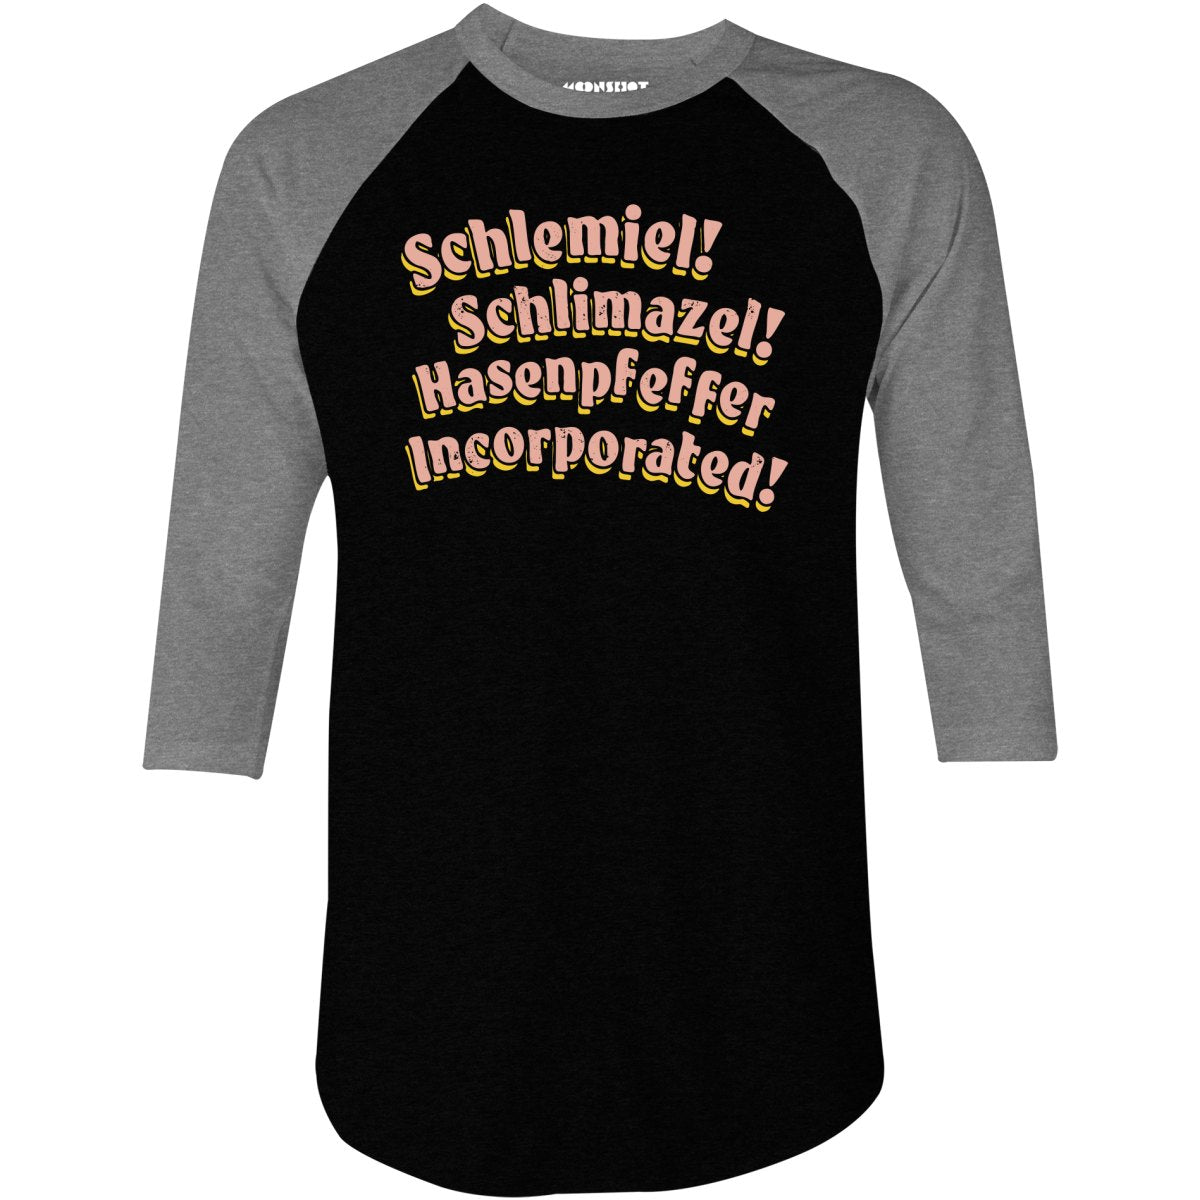 Schlemiel! Schlimazel! Hasenpfeffer Incorporated - 3/4 Sleeve Raglan T-Shirt